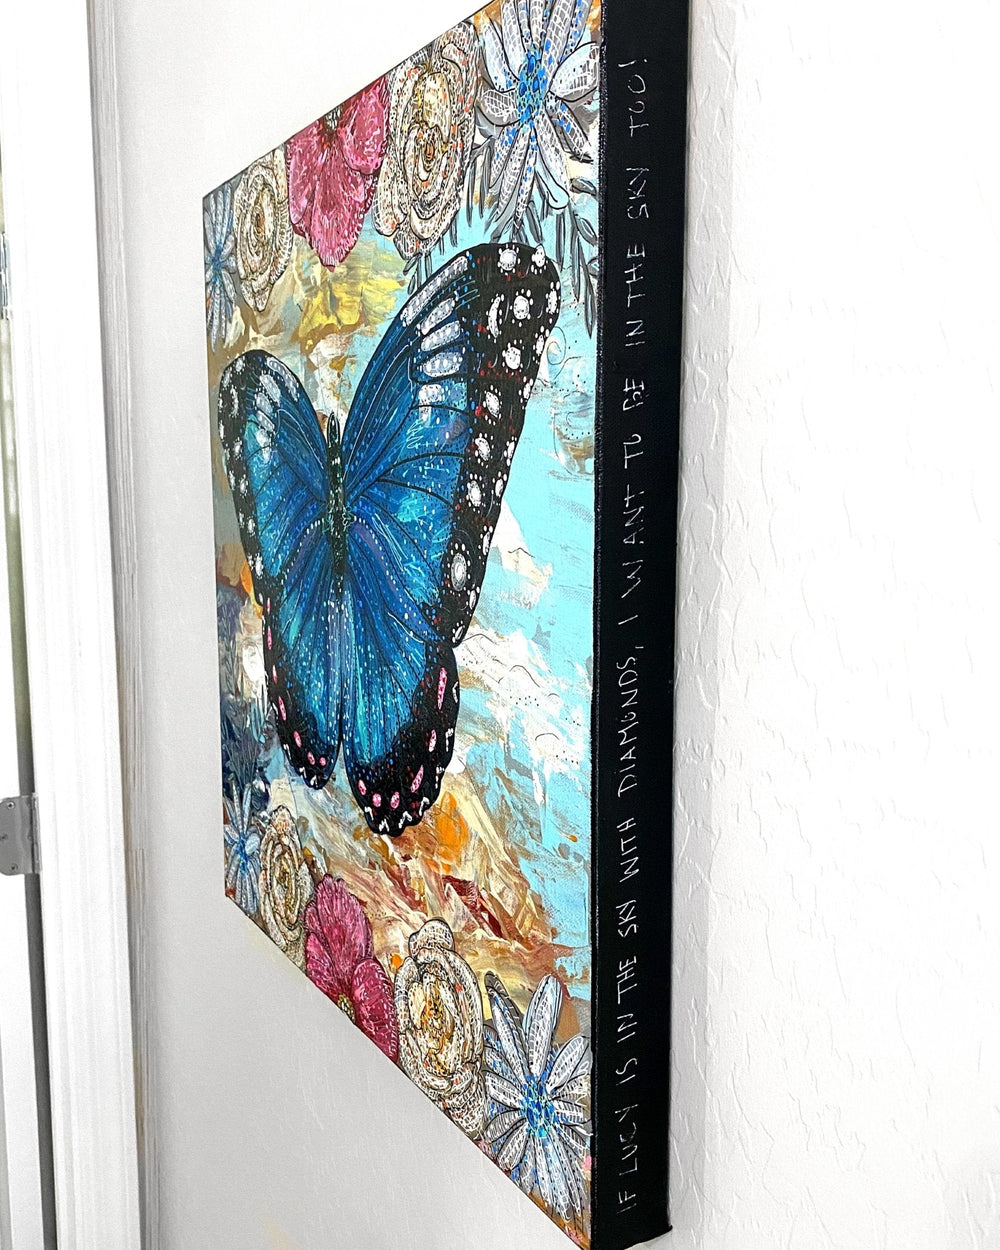 Sky Diamonds Butterfly Floral - Heather Freitas 